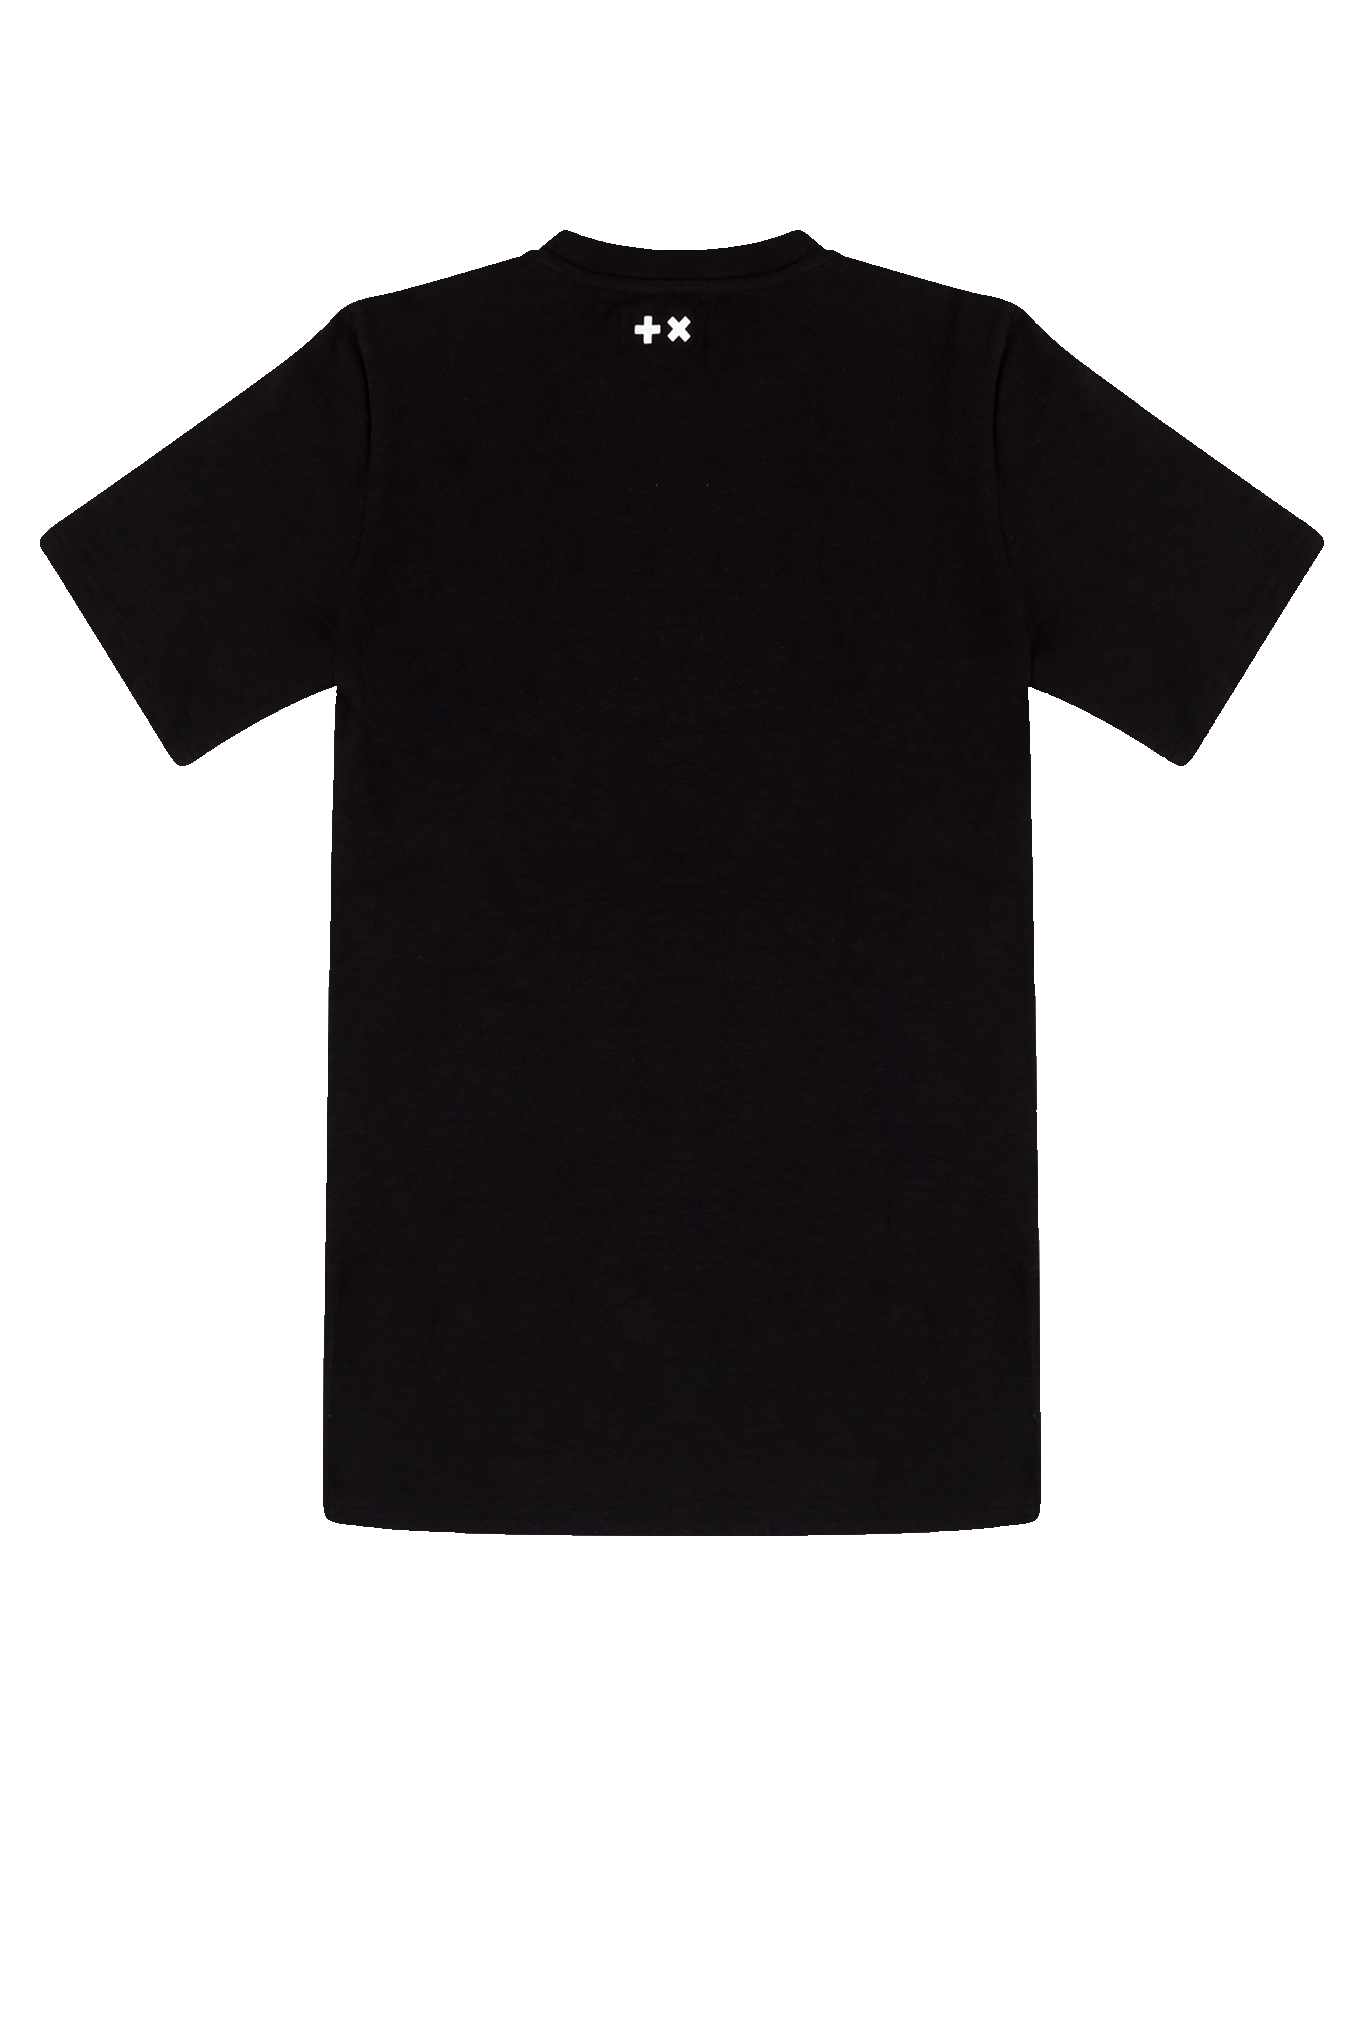 Shirt Black Transparent File